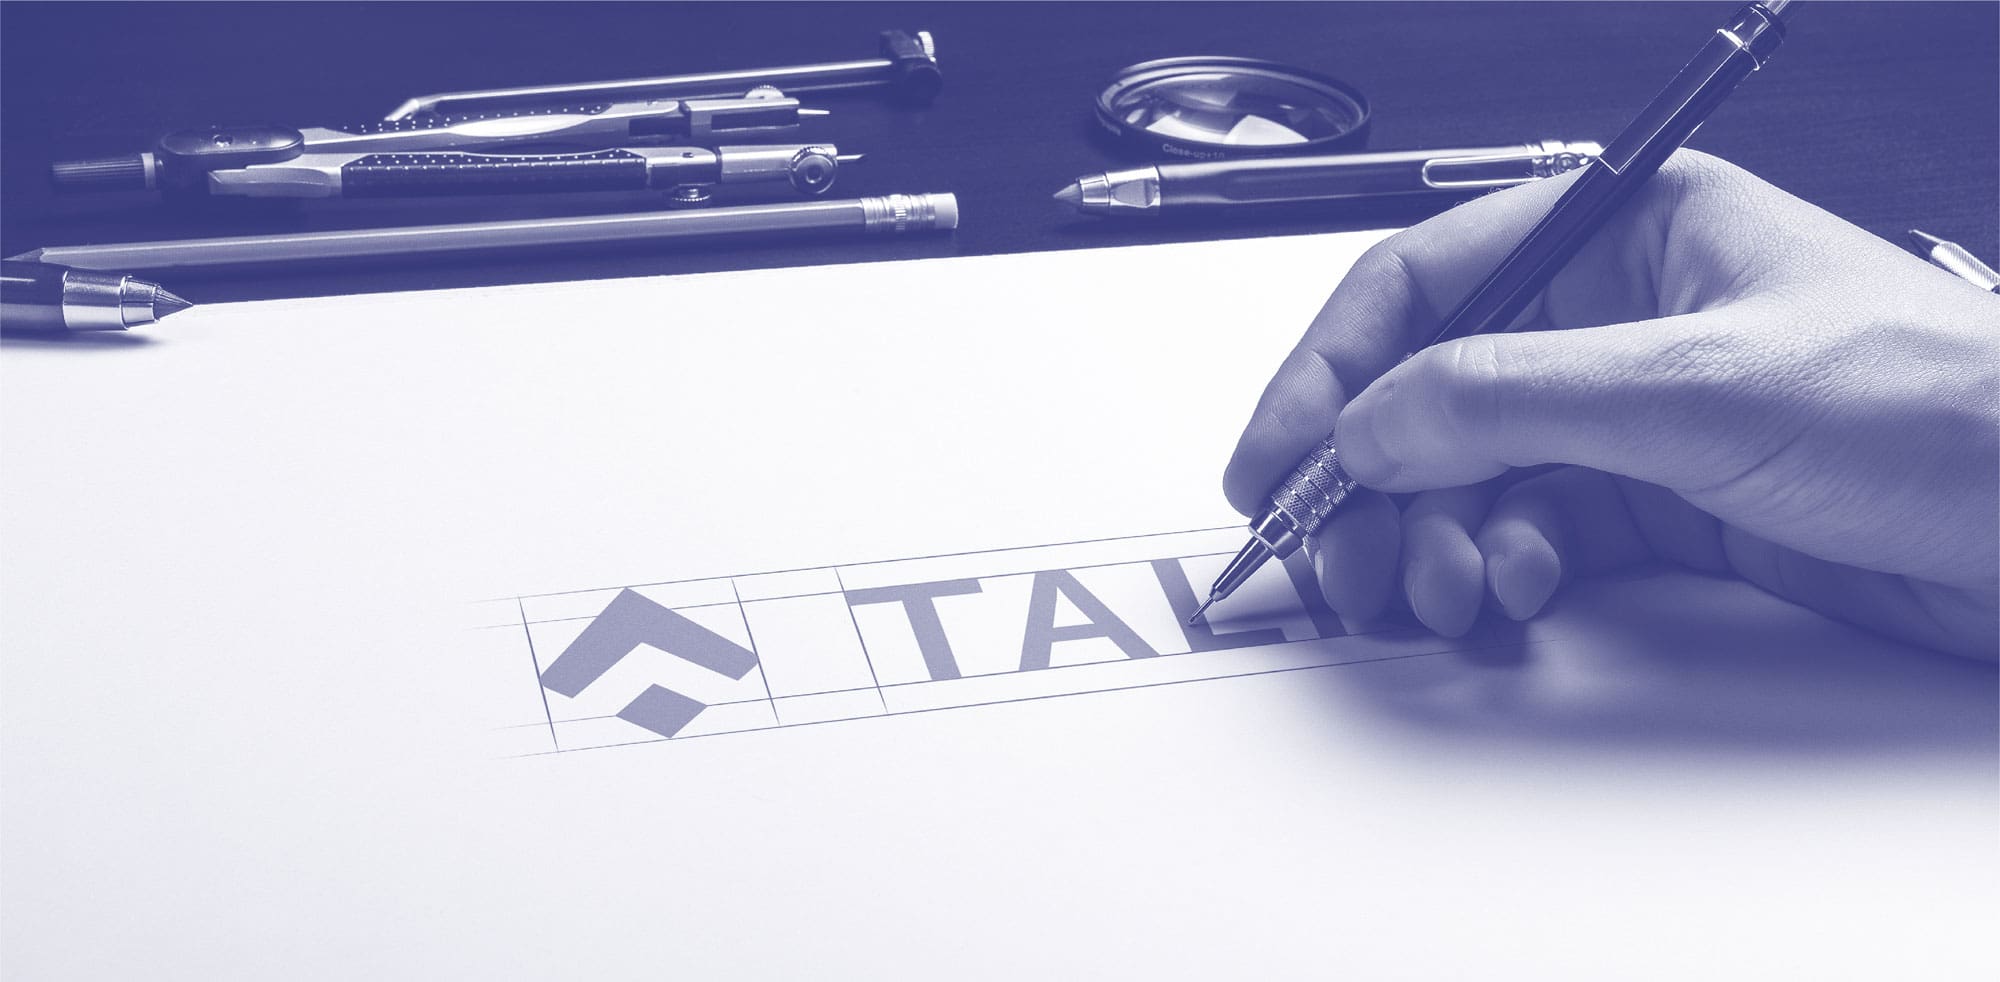 Talis Biomedical logo being drawn by hand